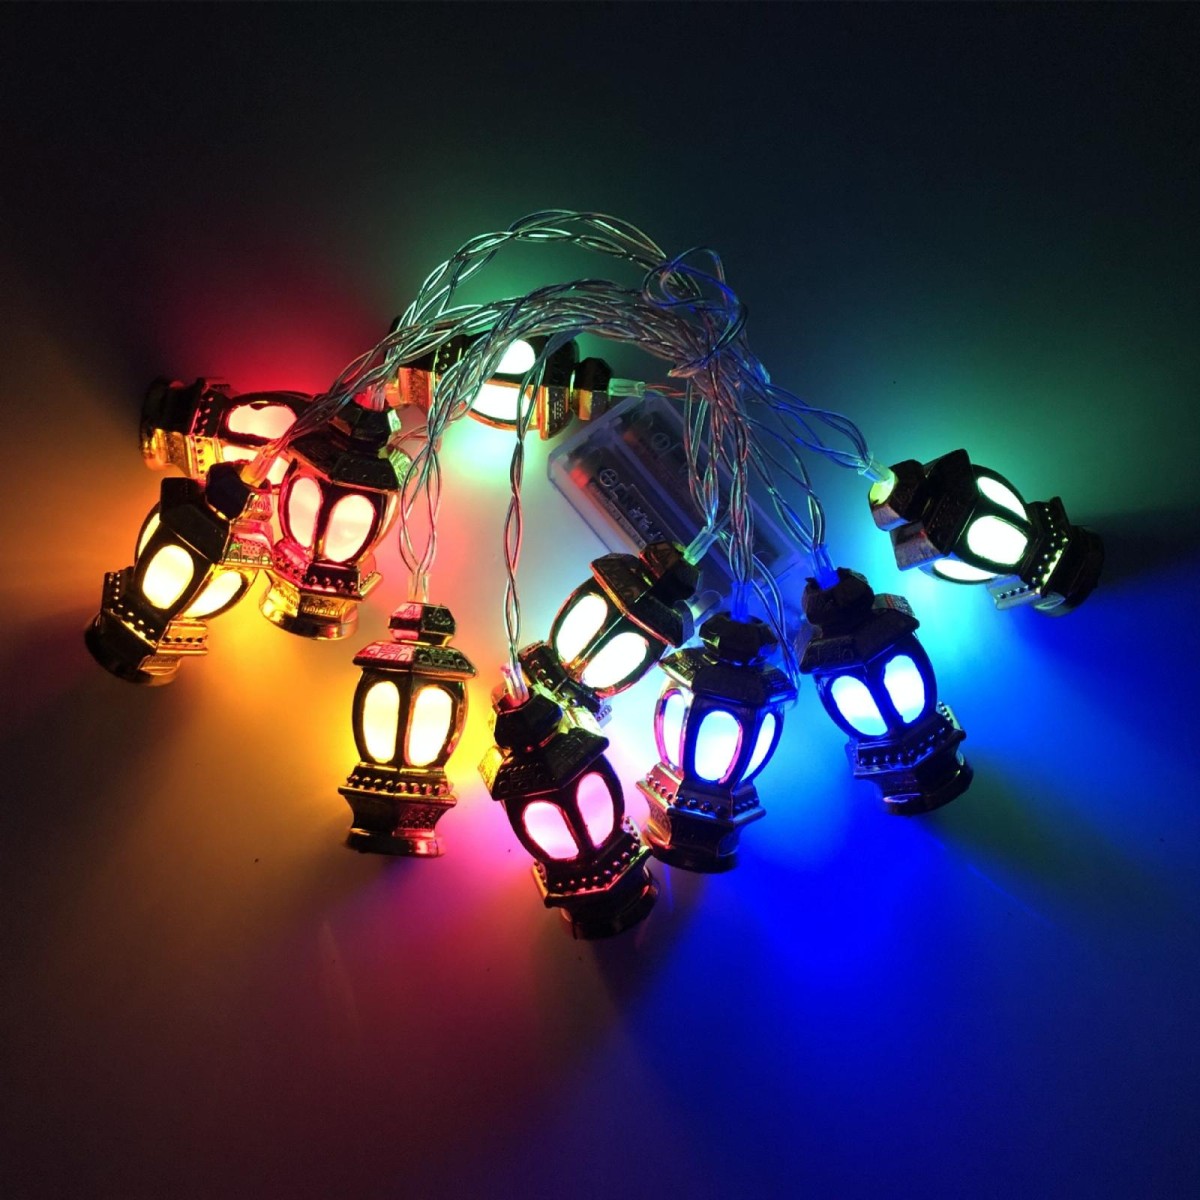 1.65m 10 Lights Battery Model 3D Palace Lights Decorative String Lights Eid Al-Adha Holiday Lights(Golden -Colorful)